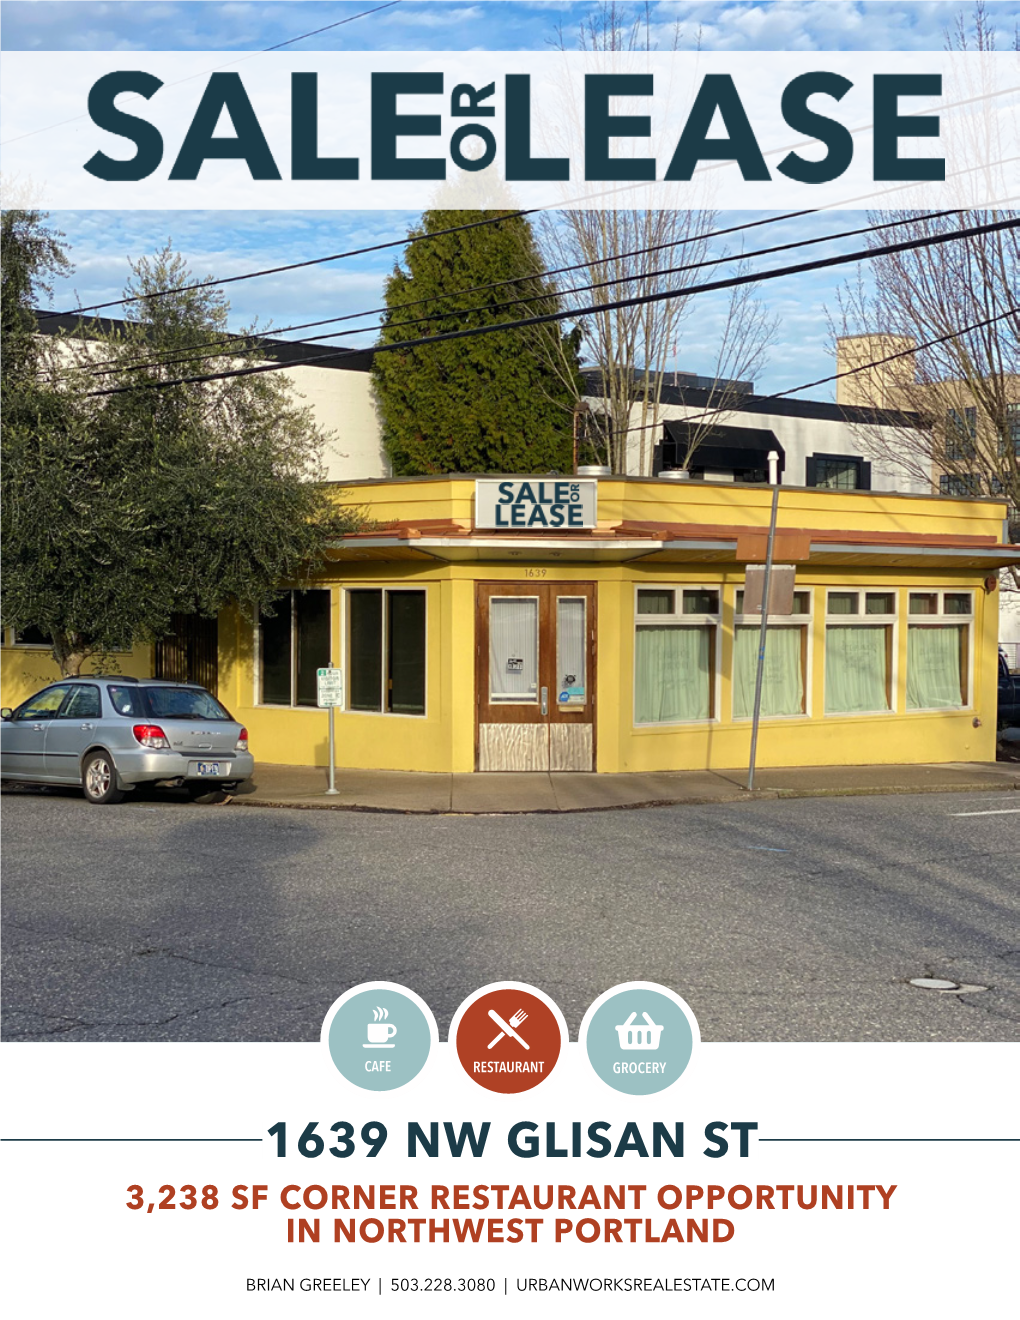 1639 Nw Glisan St 3,238 Sf Corner Restaurant Opportunity in Northwest Portland